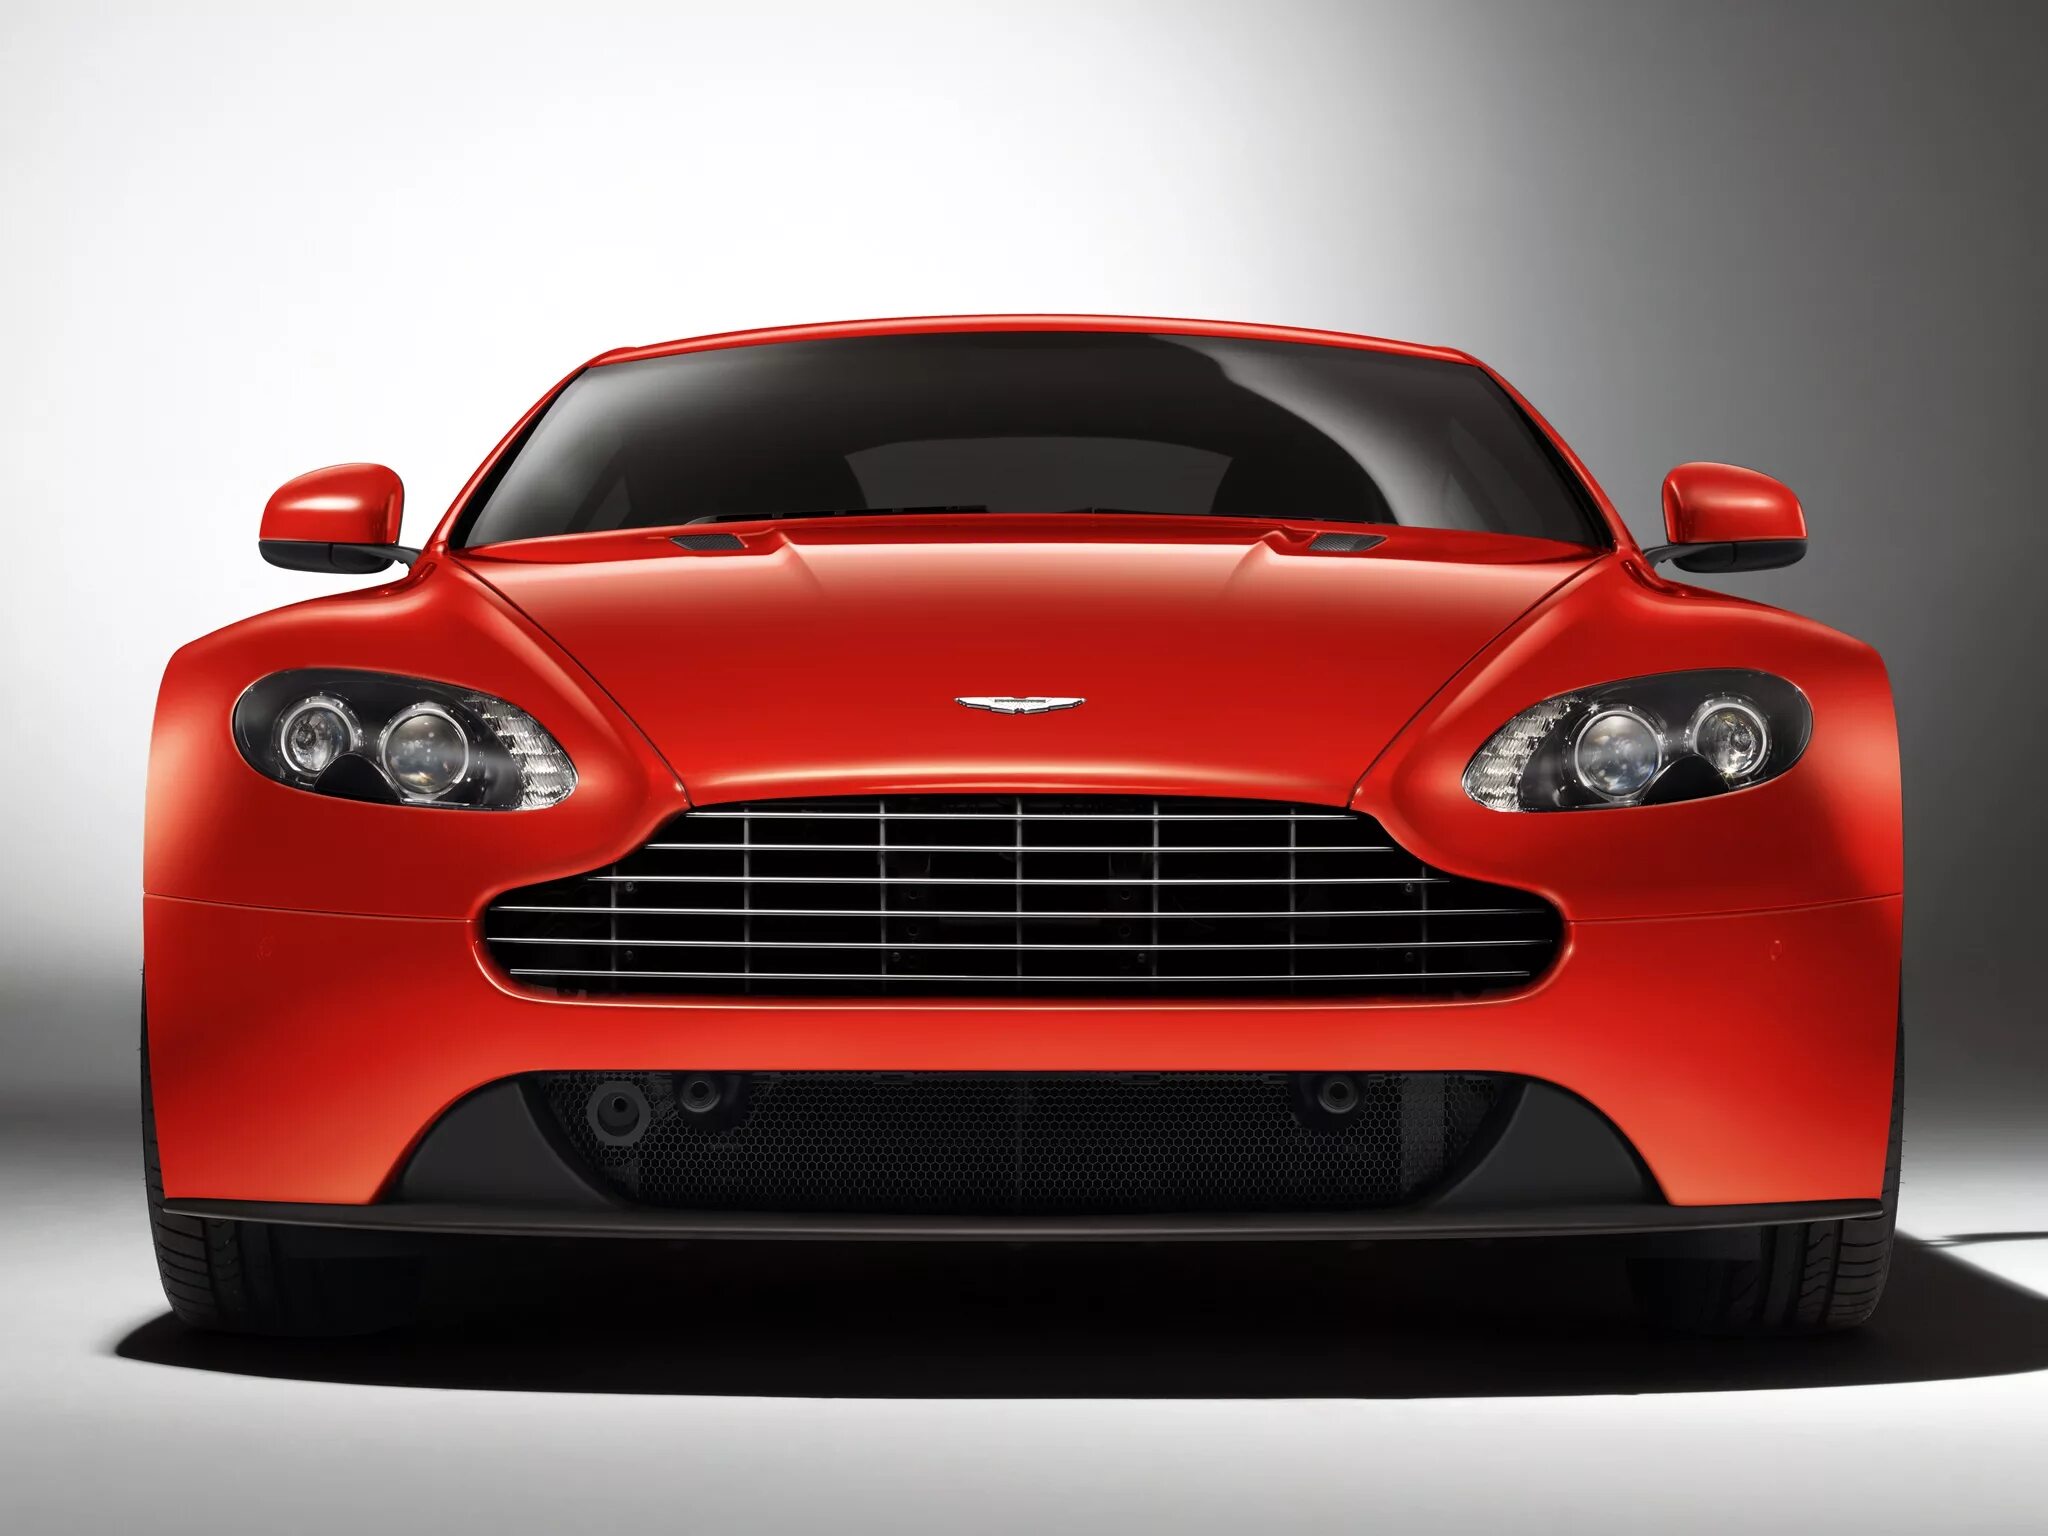 Открой картинки машин. Aston Martin db9 красный. Aston Martin DBS v12 красный. Aston Martin Vantage 2012.